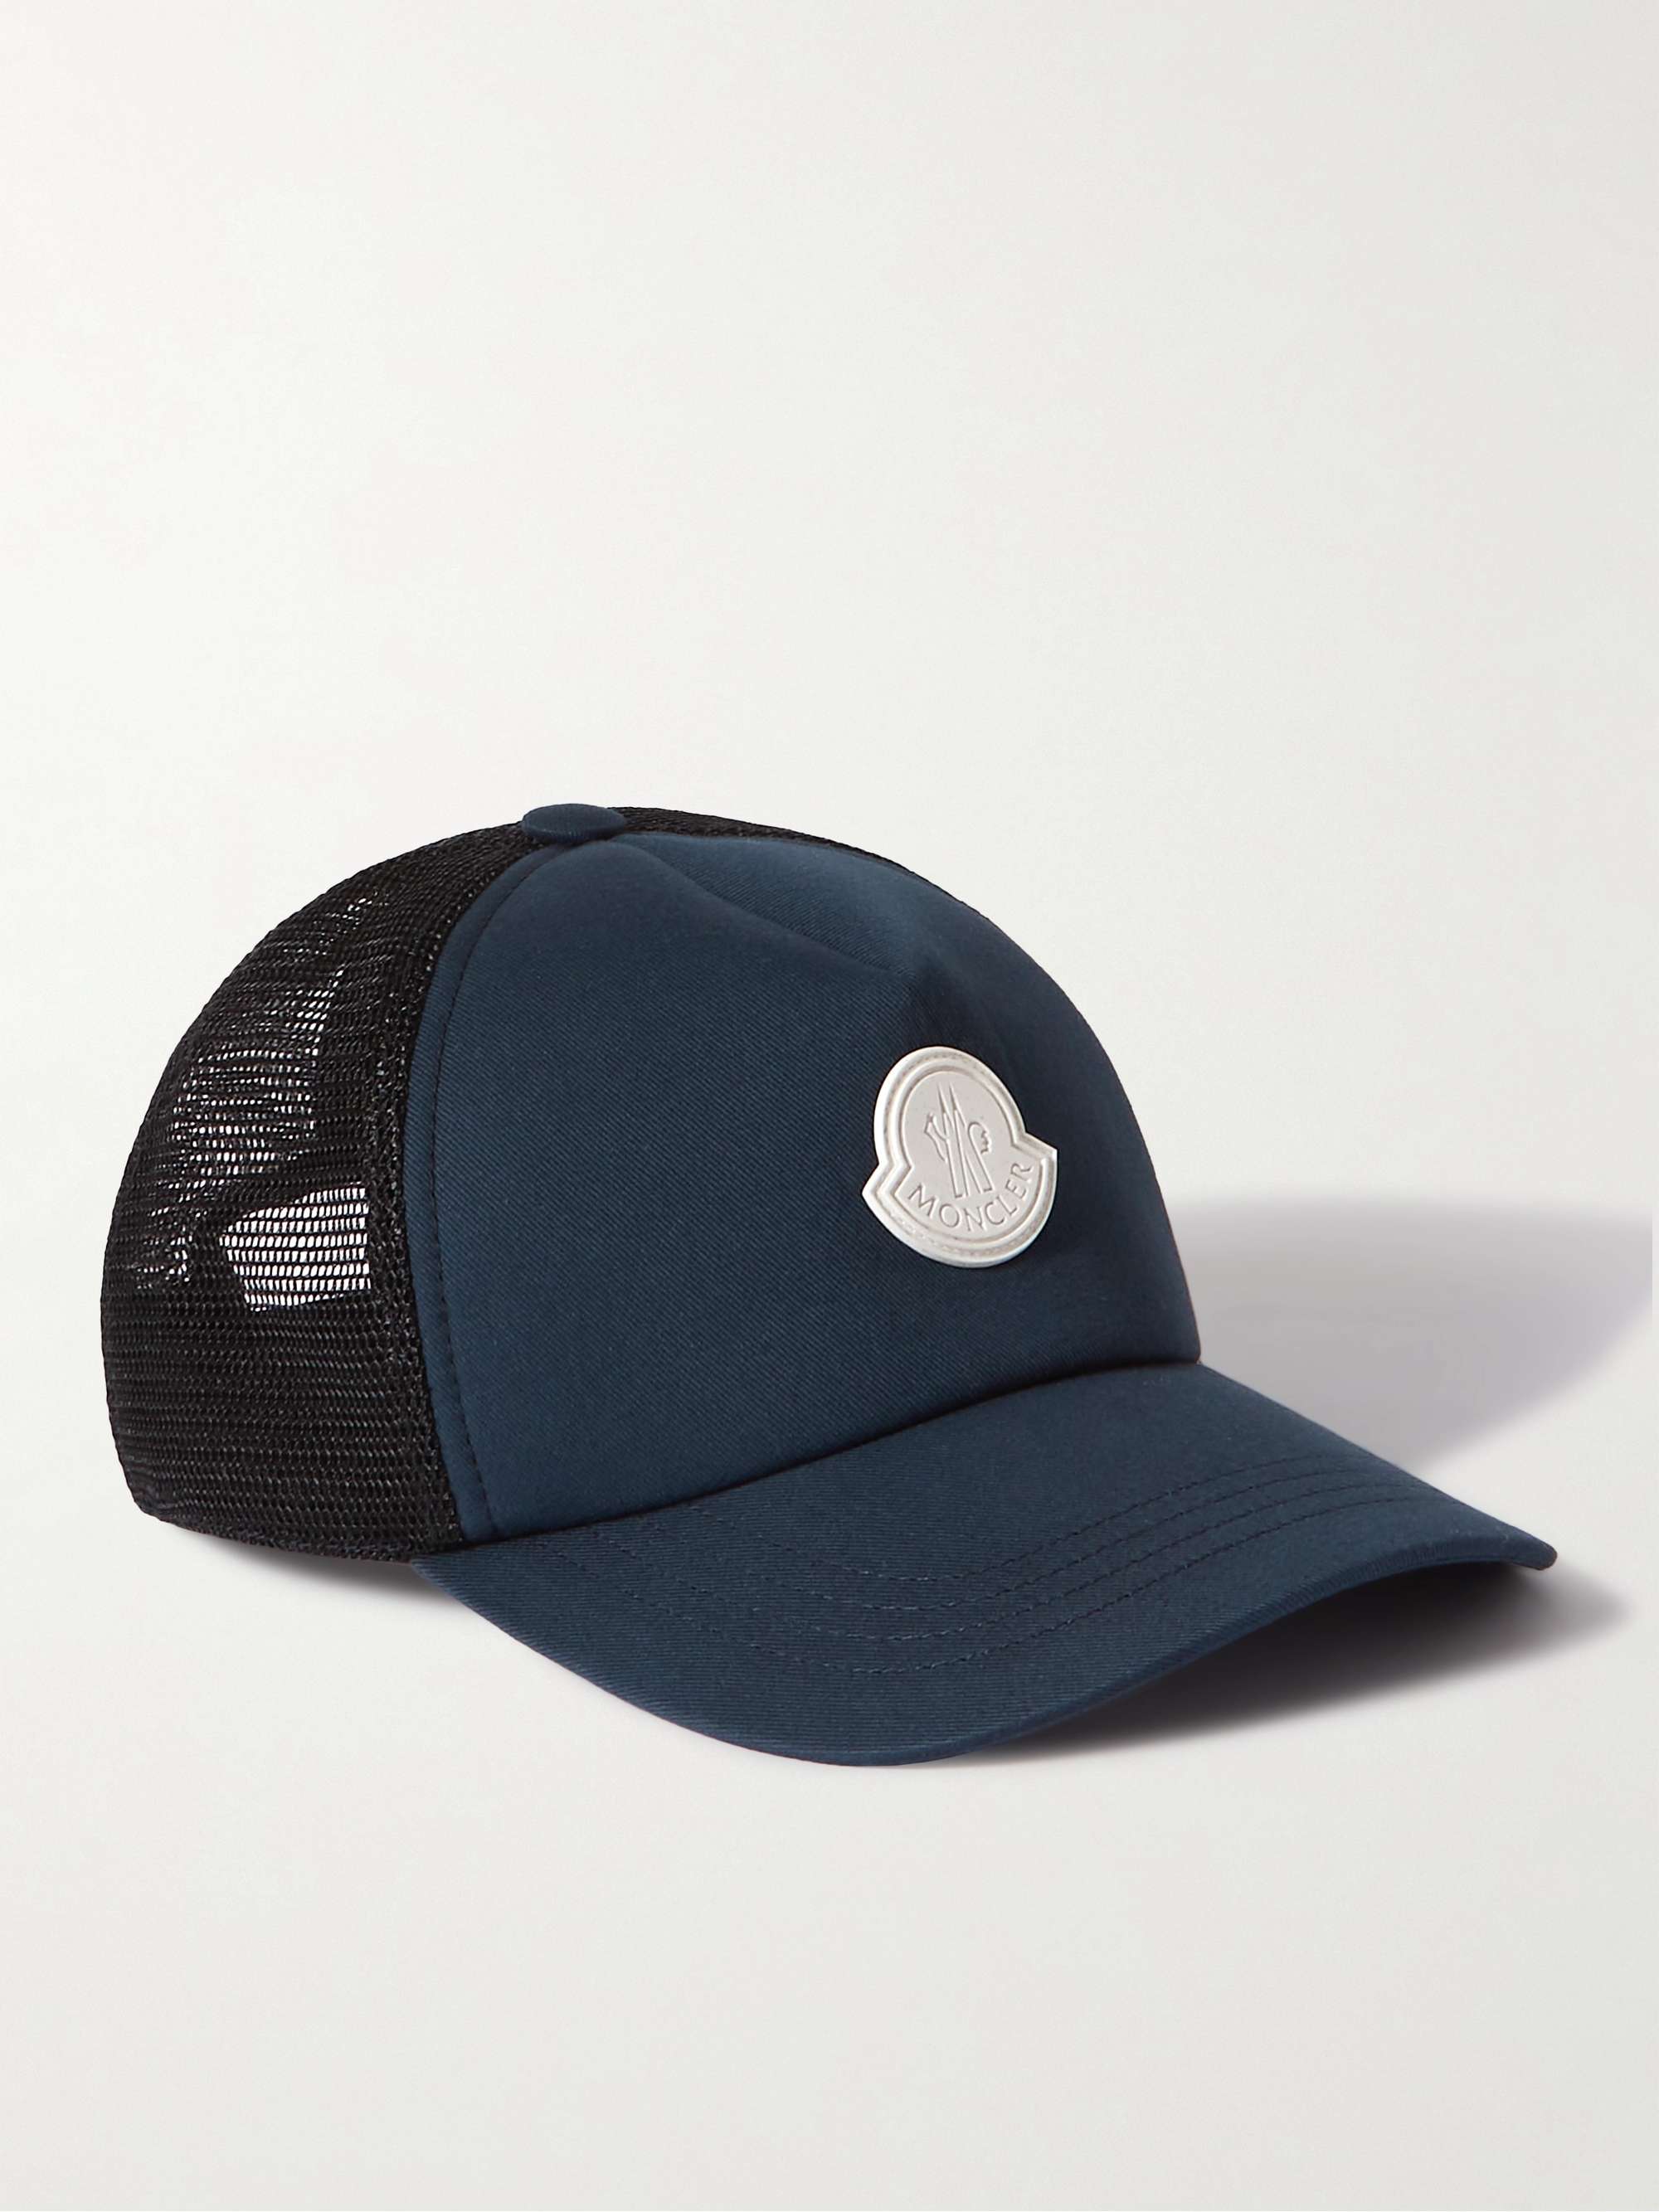 Blue One Size Cotton Twill Applique Miller Mens Lite Adjustable Baseball Cap